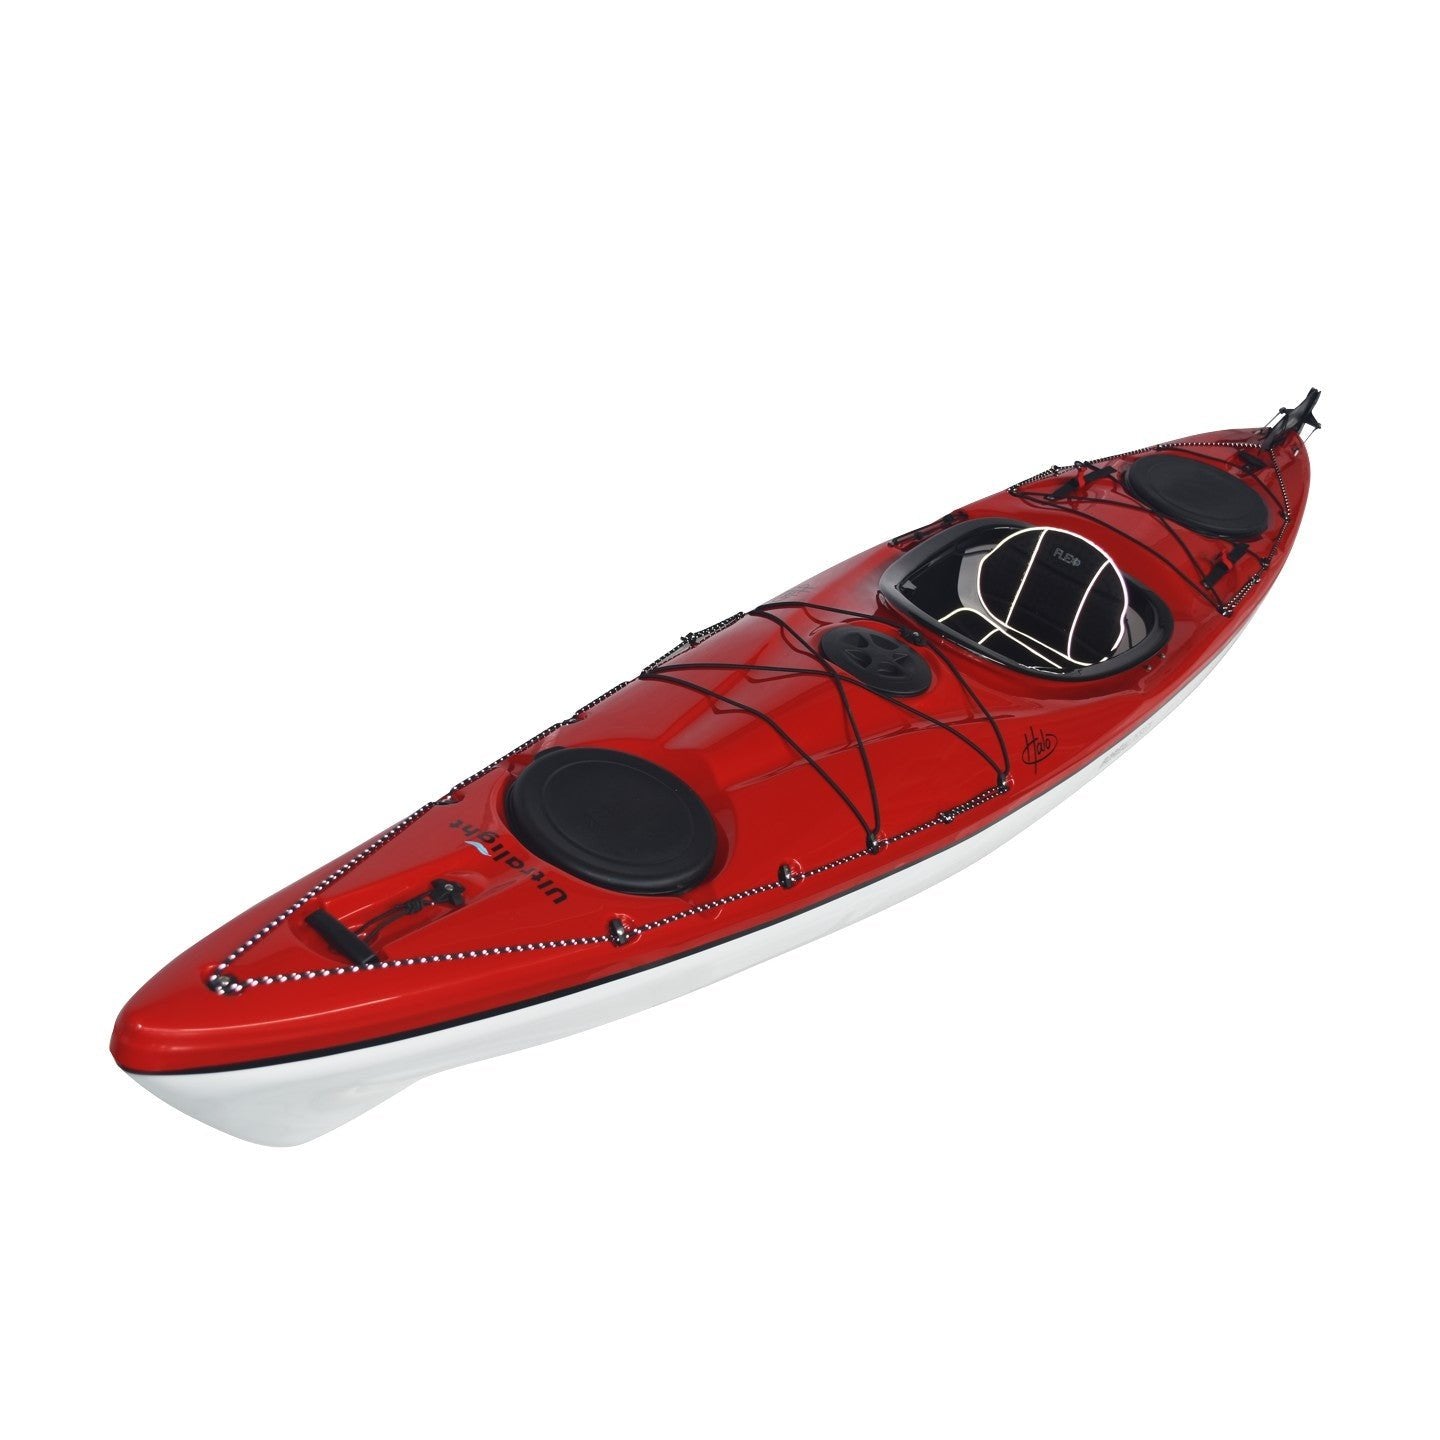 Halo 130 Ultralight Kayak Red Angle